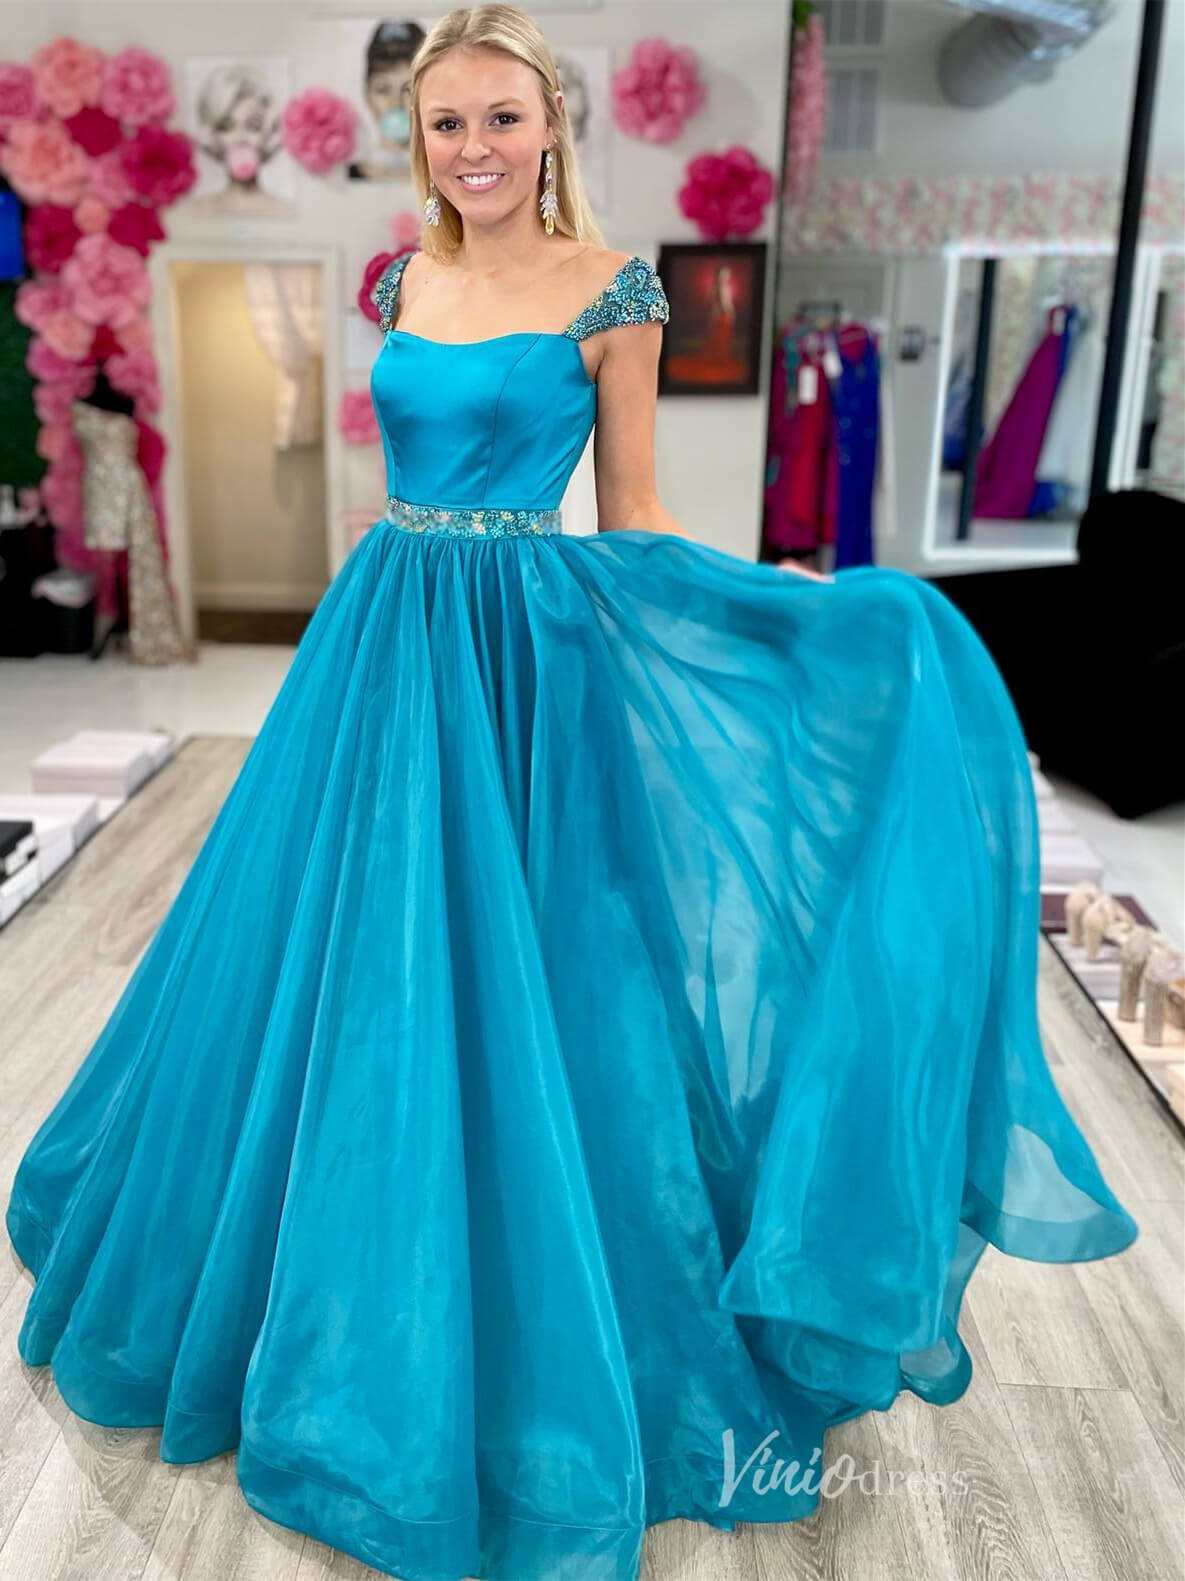 Teal Organza Prom Dresses Satin Bodice Sequin Waist Formal Dress FD3980-prom dresses-Viniodress-Teal-Custom Size-Viniodress